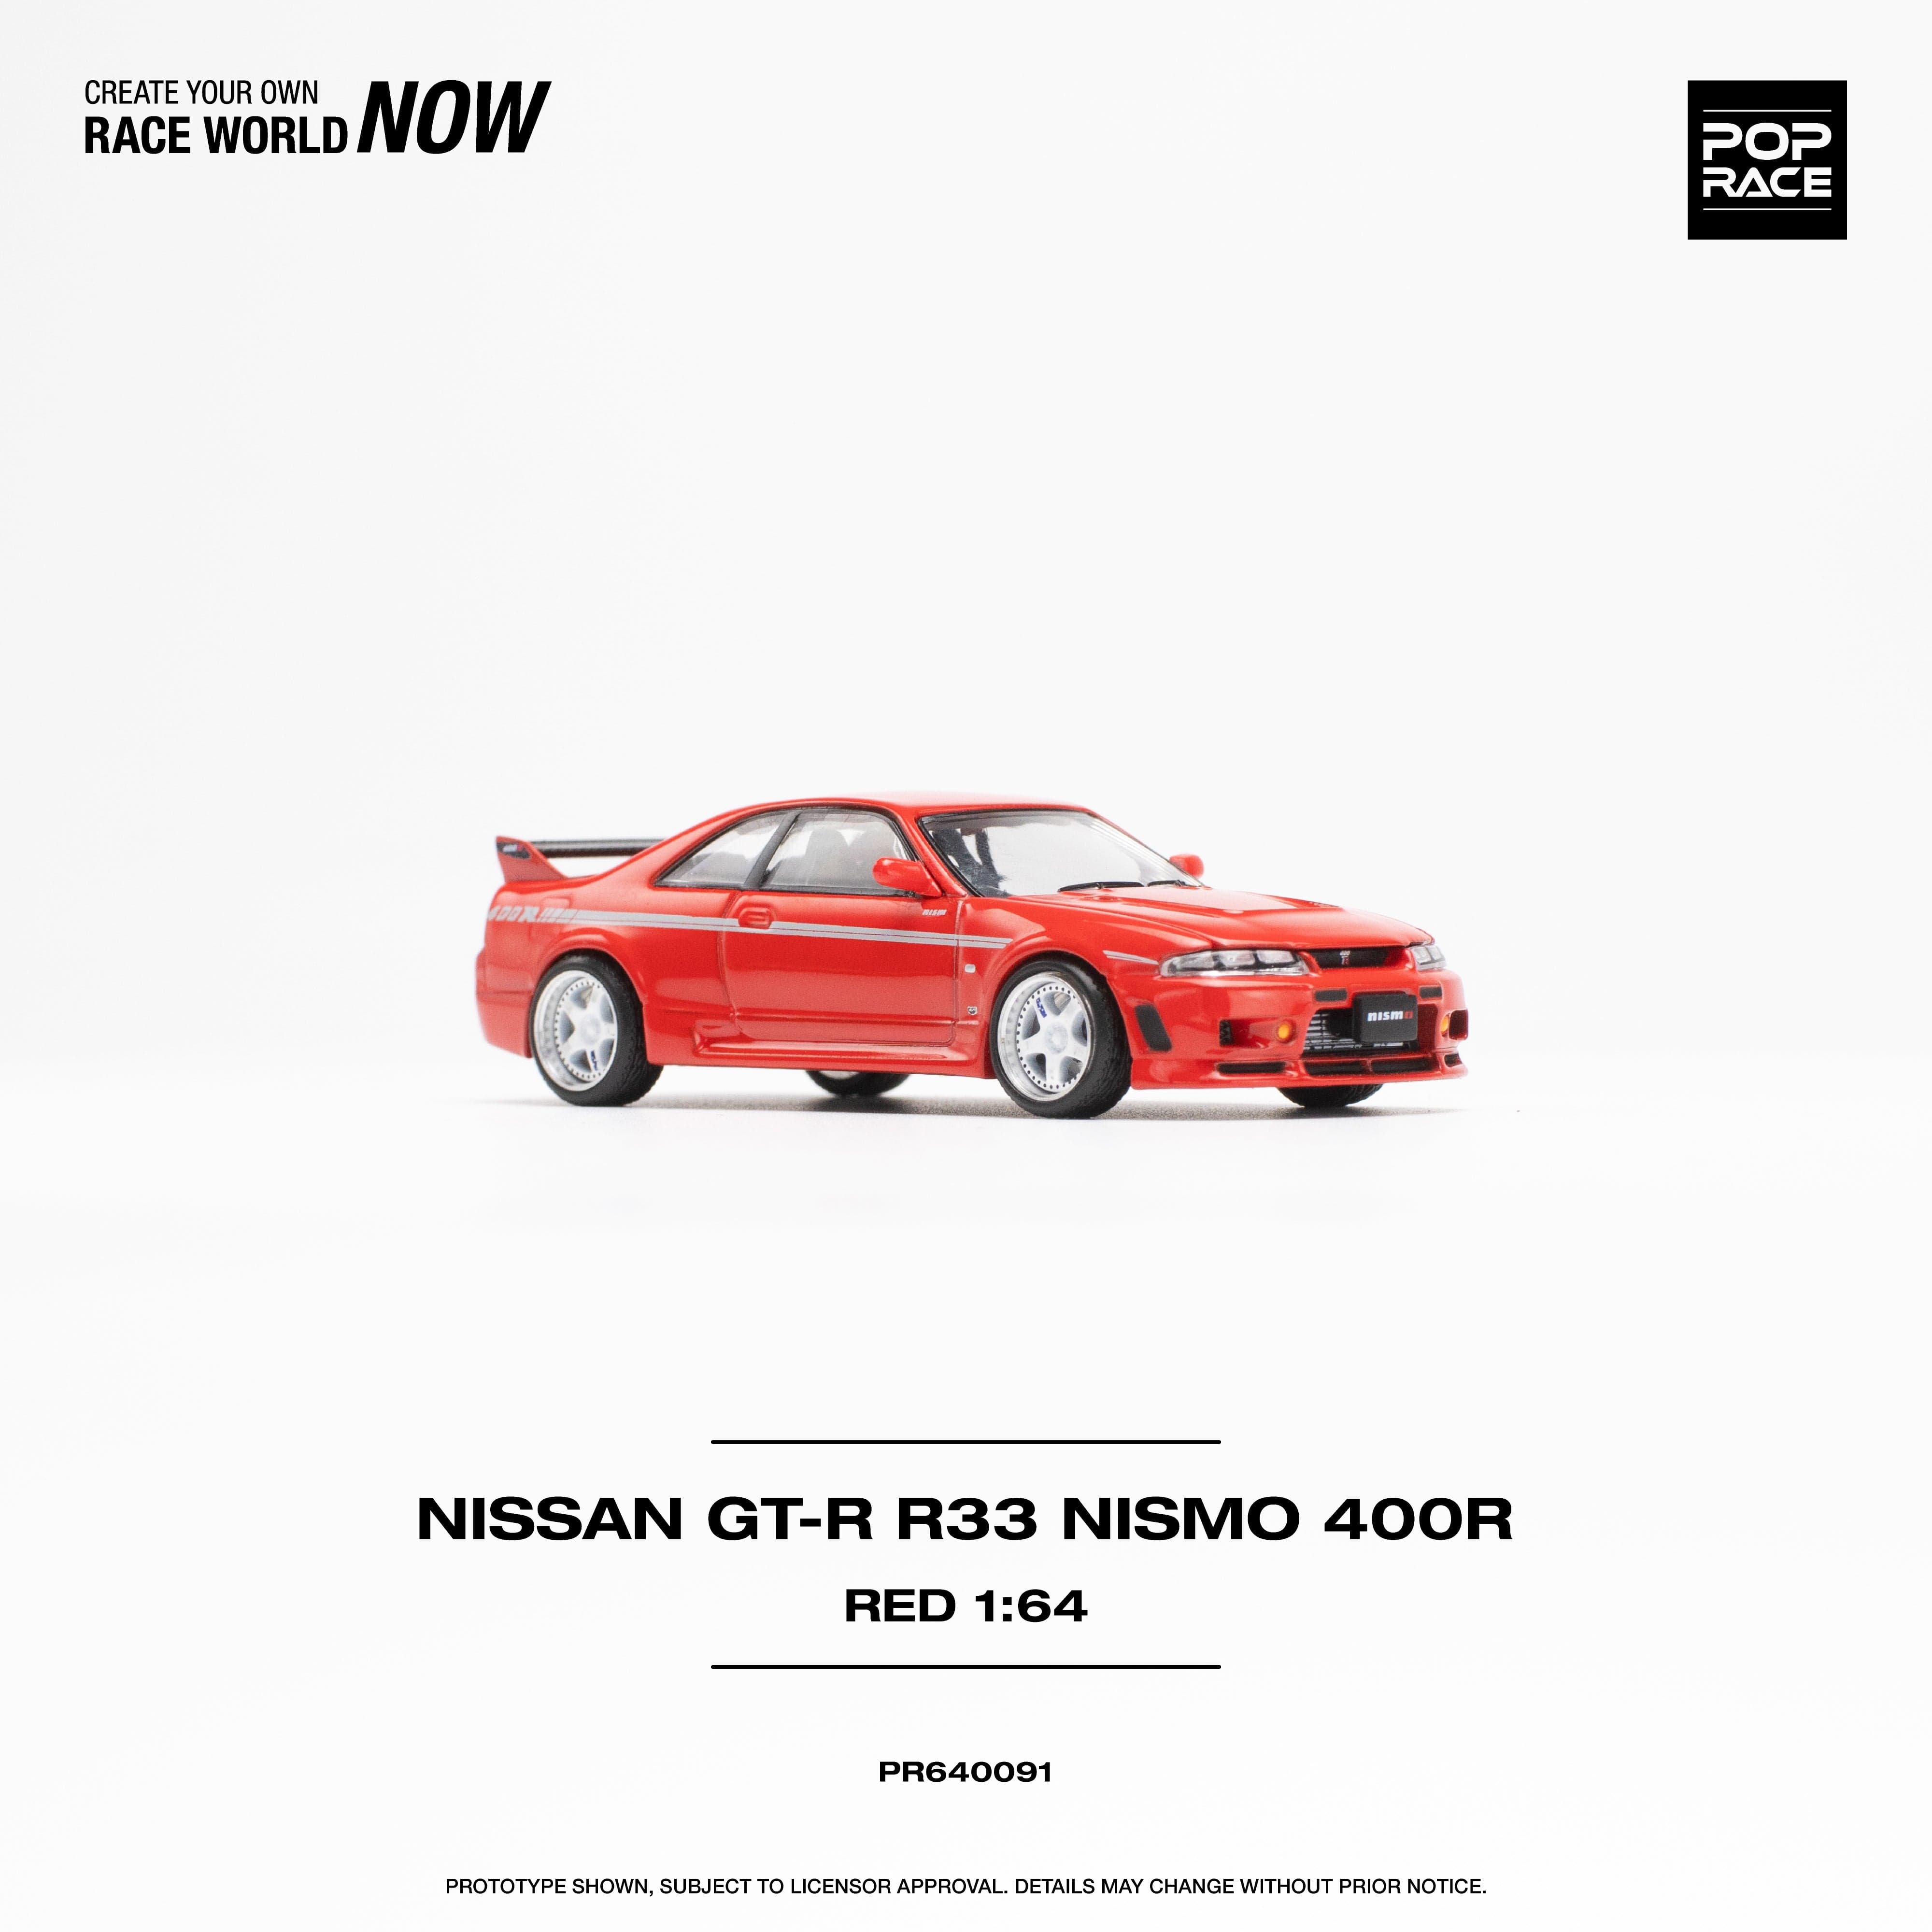 Nissan Skyline GTR R33 Nismo 400R Red Pop Race 1/64 (pre-order 